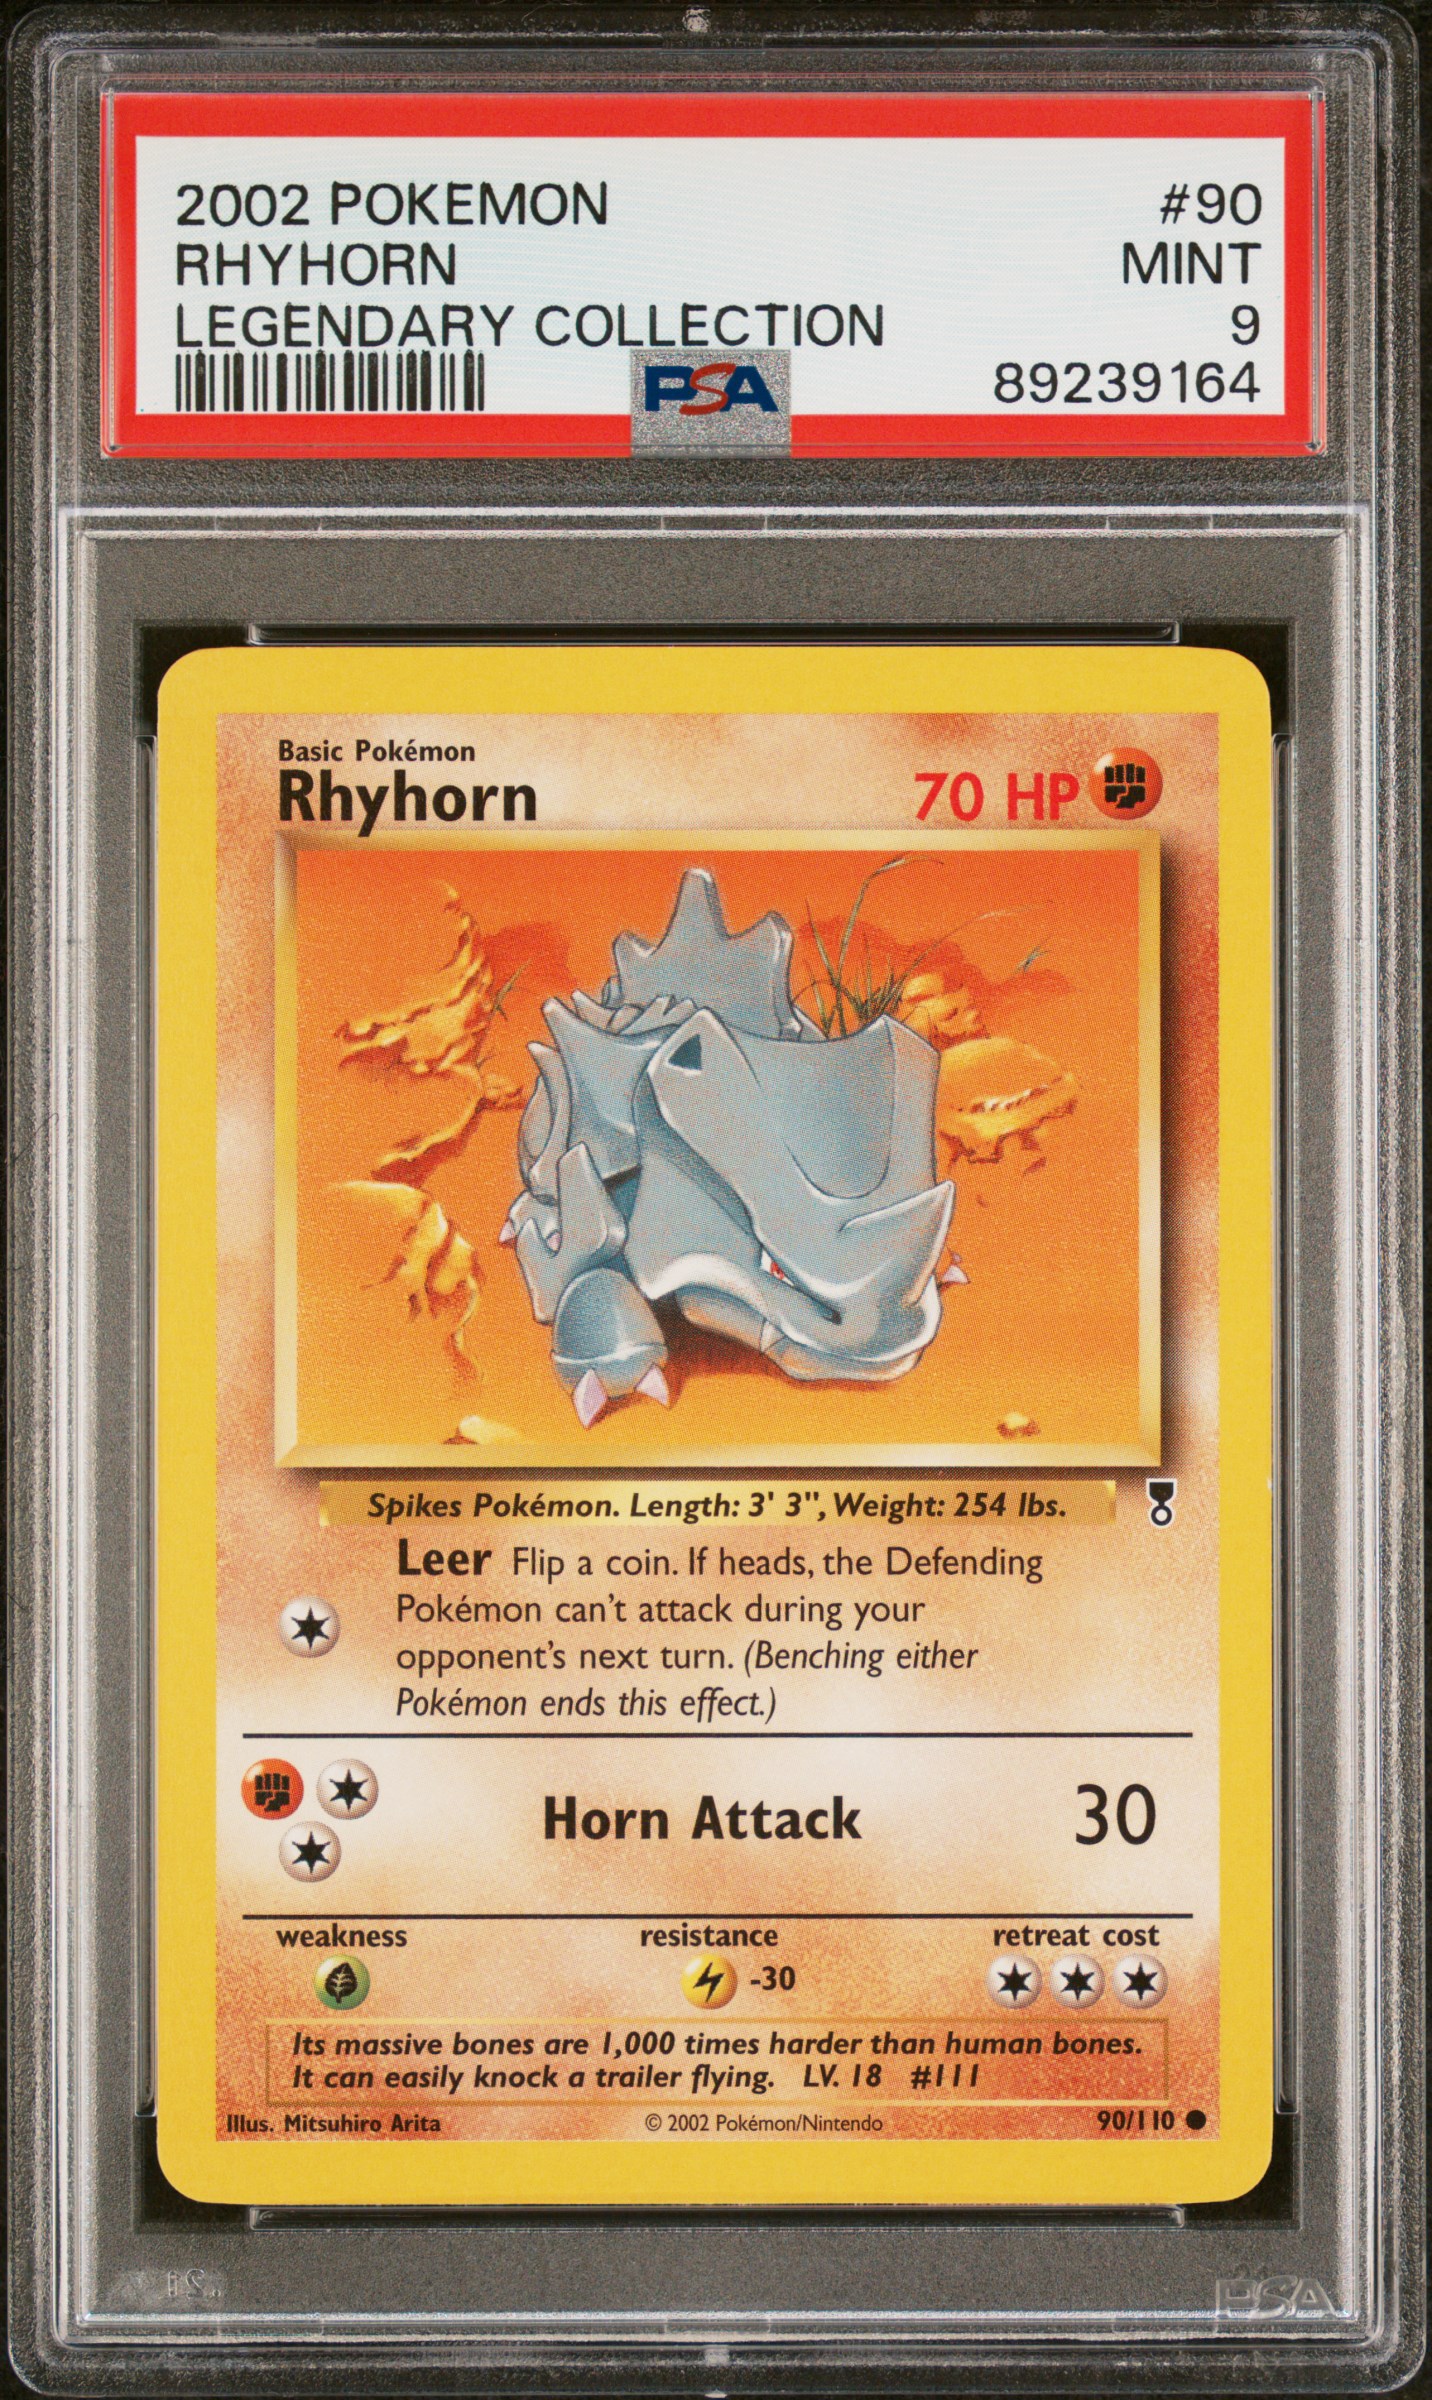 2002 Pokemon Legendary Collection 90 Rhyhorn – PSA MINT 9